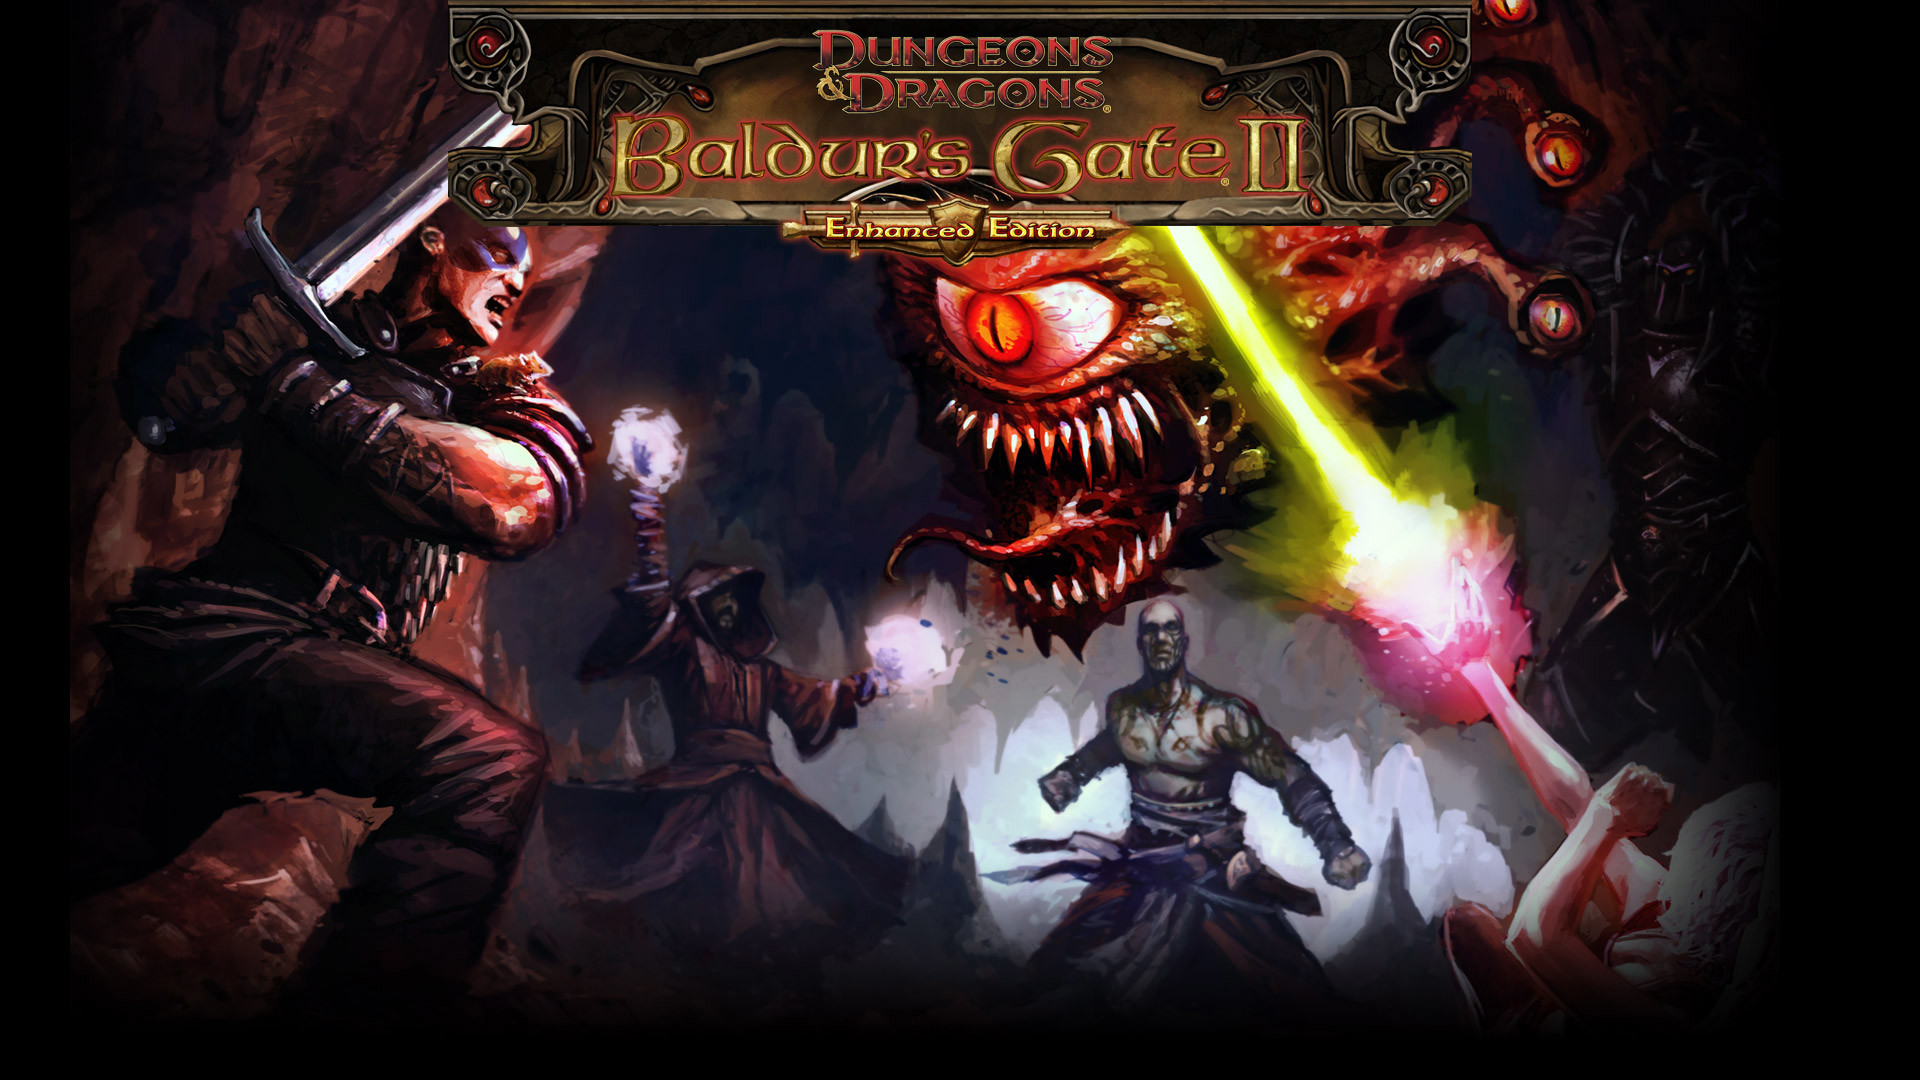 1920x1080 Baldur's Gate II: Shadows of Amn (game) | Forgotten Realms Wiki | FANDOM  powered by Wikia